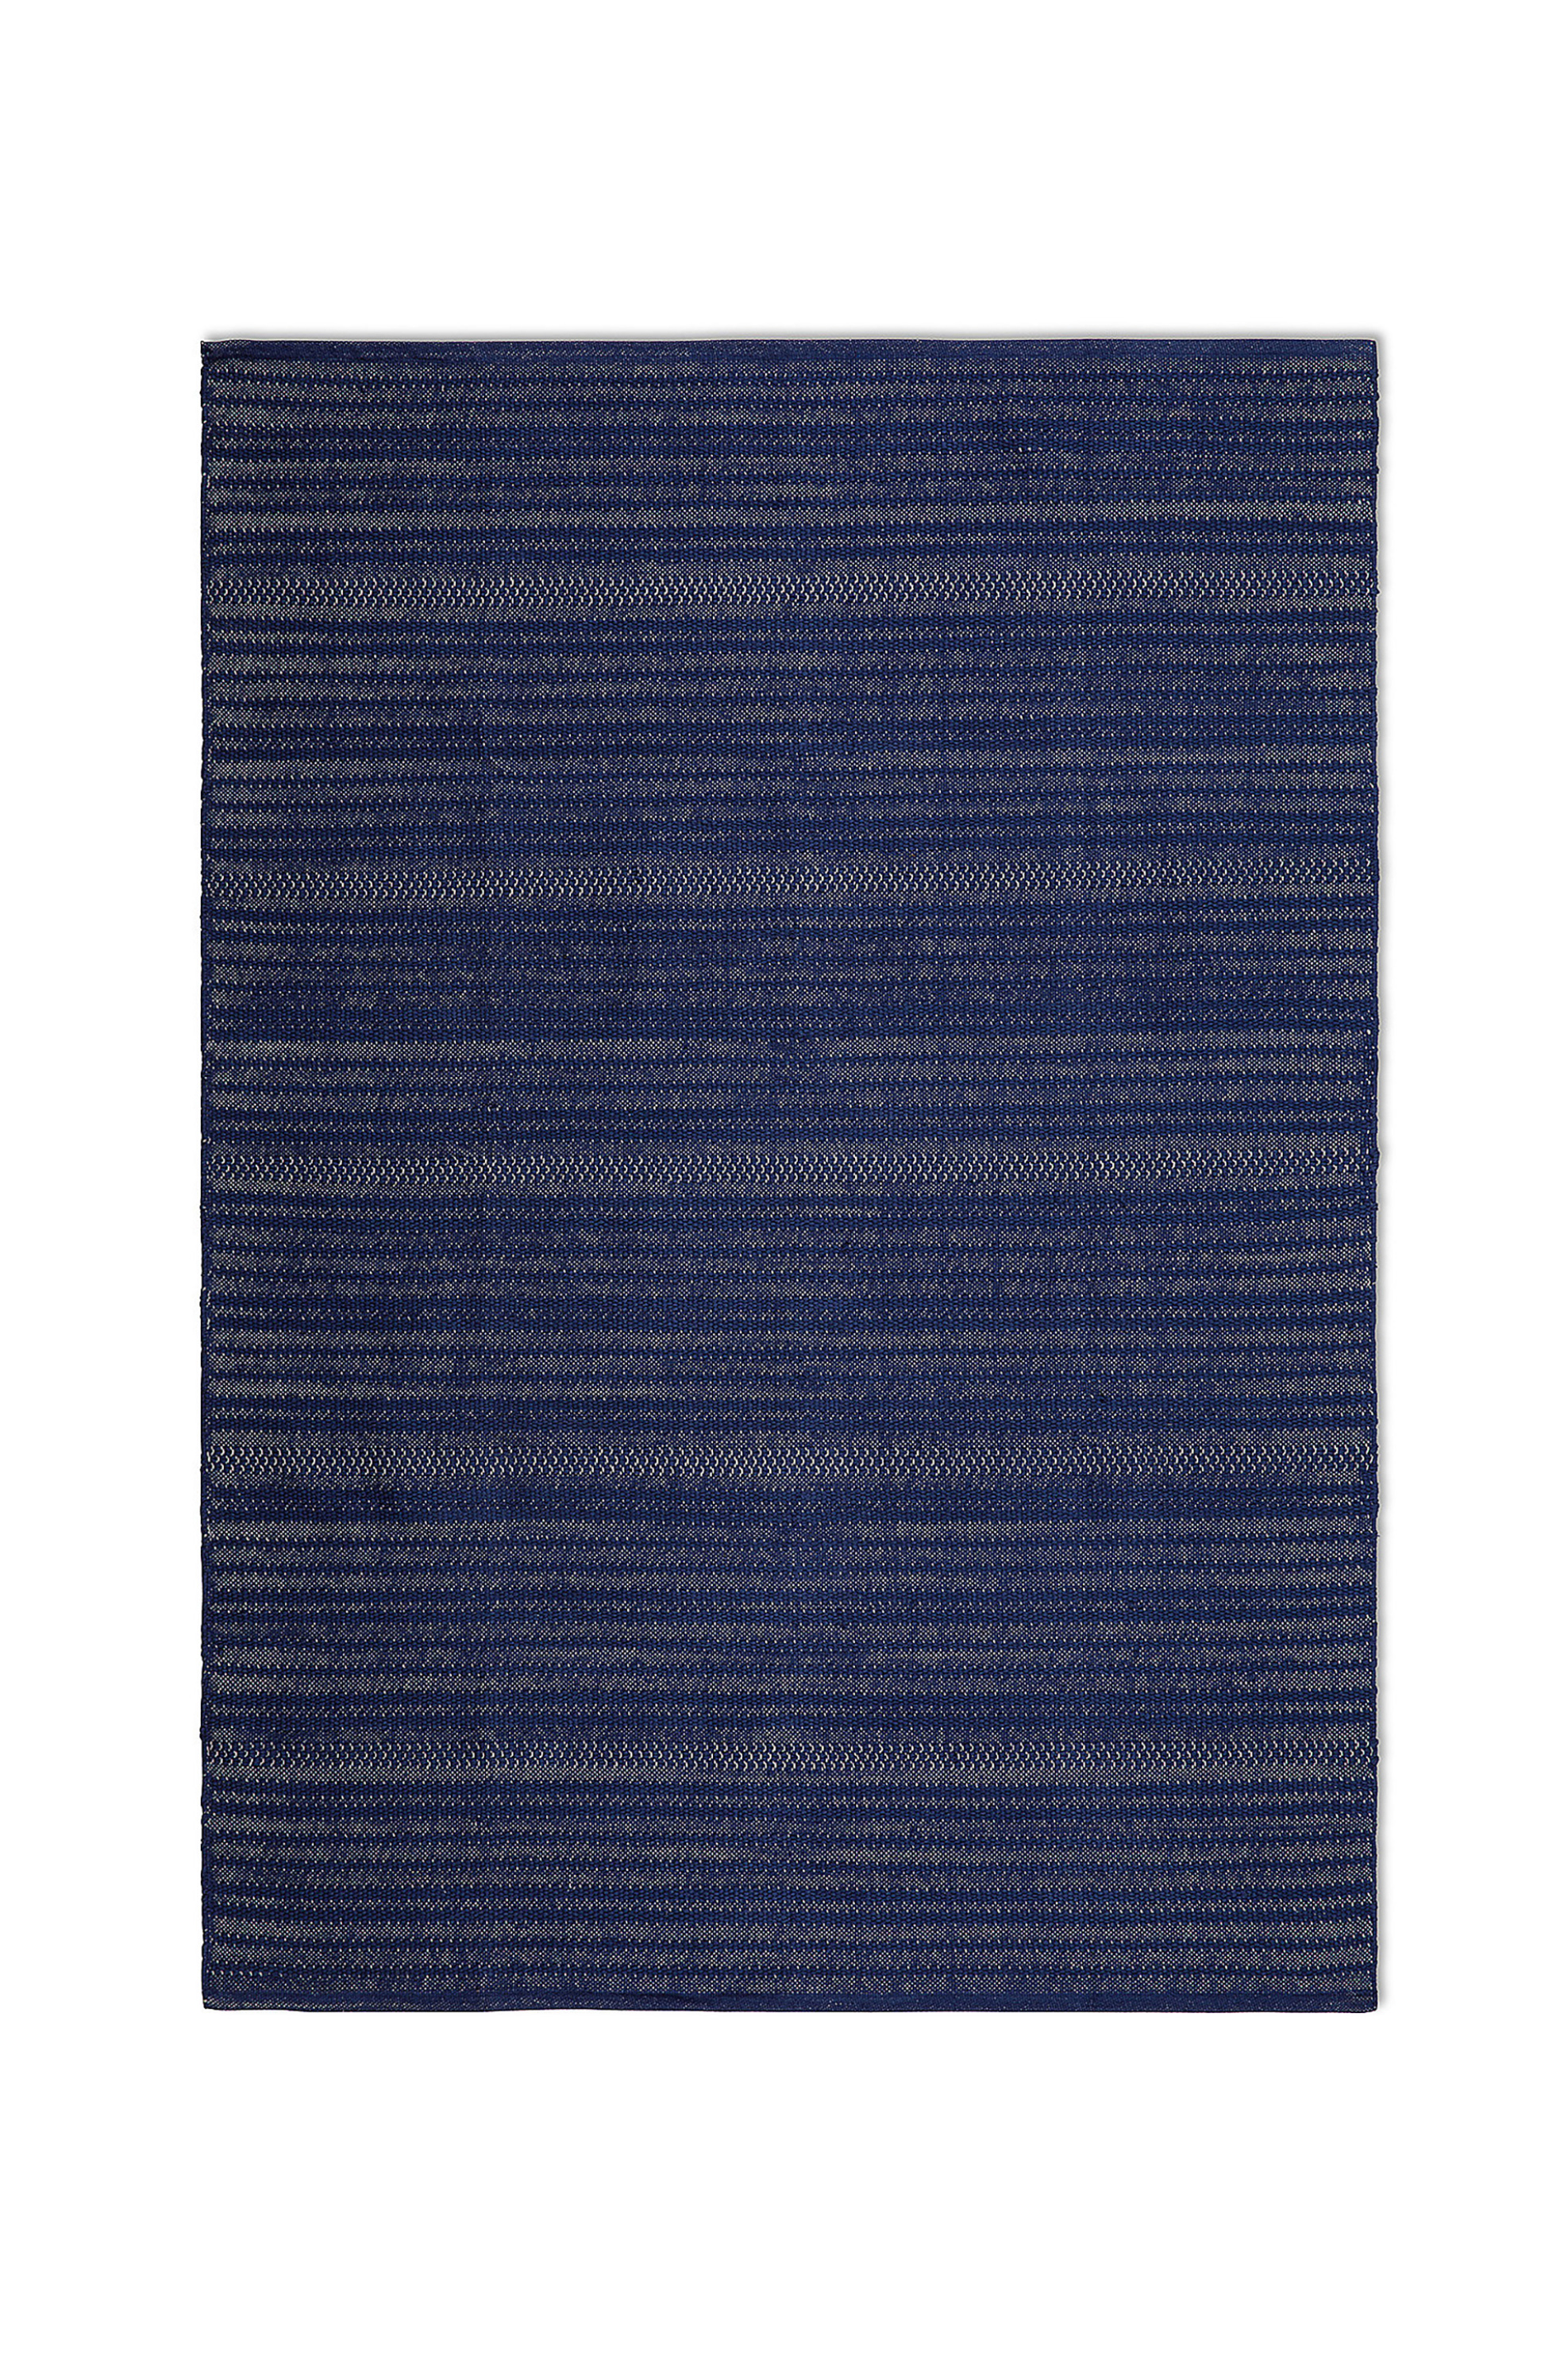 Coincasa χαλί με ριγέ μοτίβο μονόχρωμο 210 x 150 cm - 007256396 Μπλε Σκούρο 2-7055003045|EE0248|